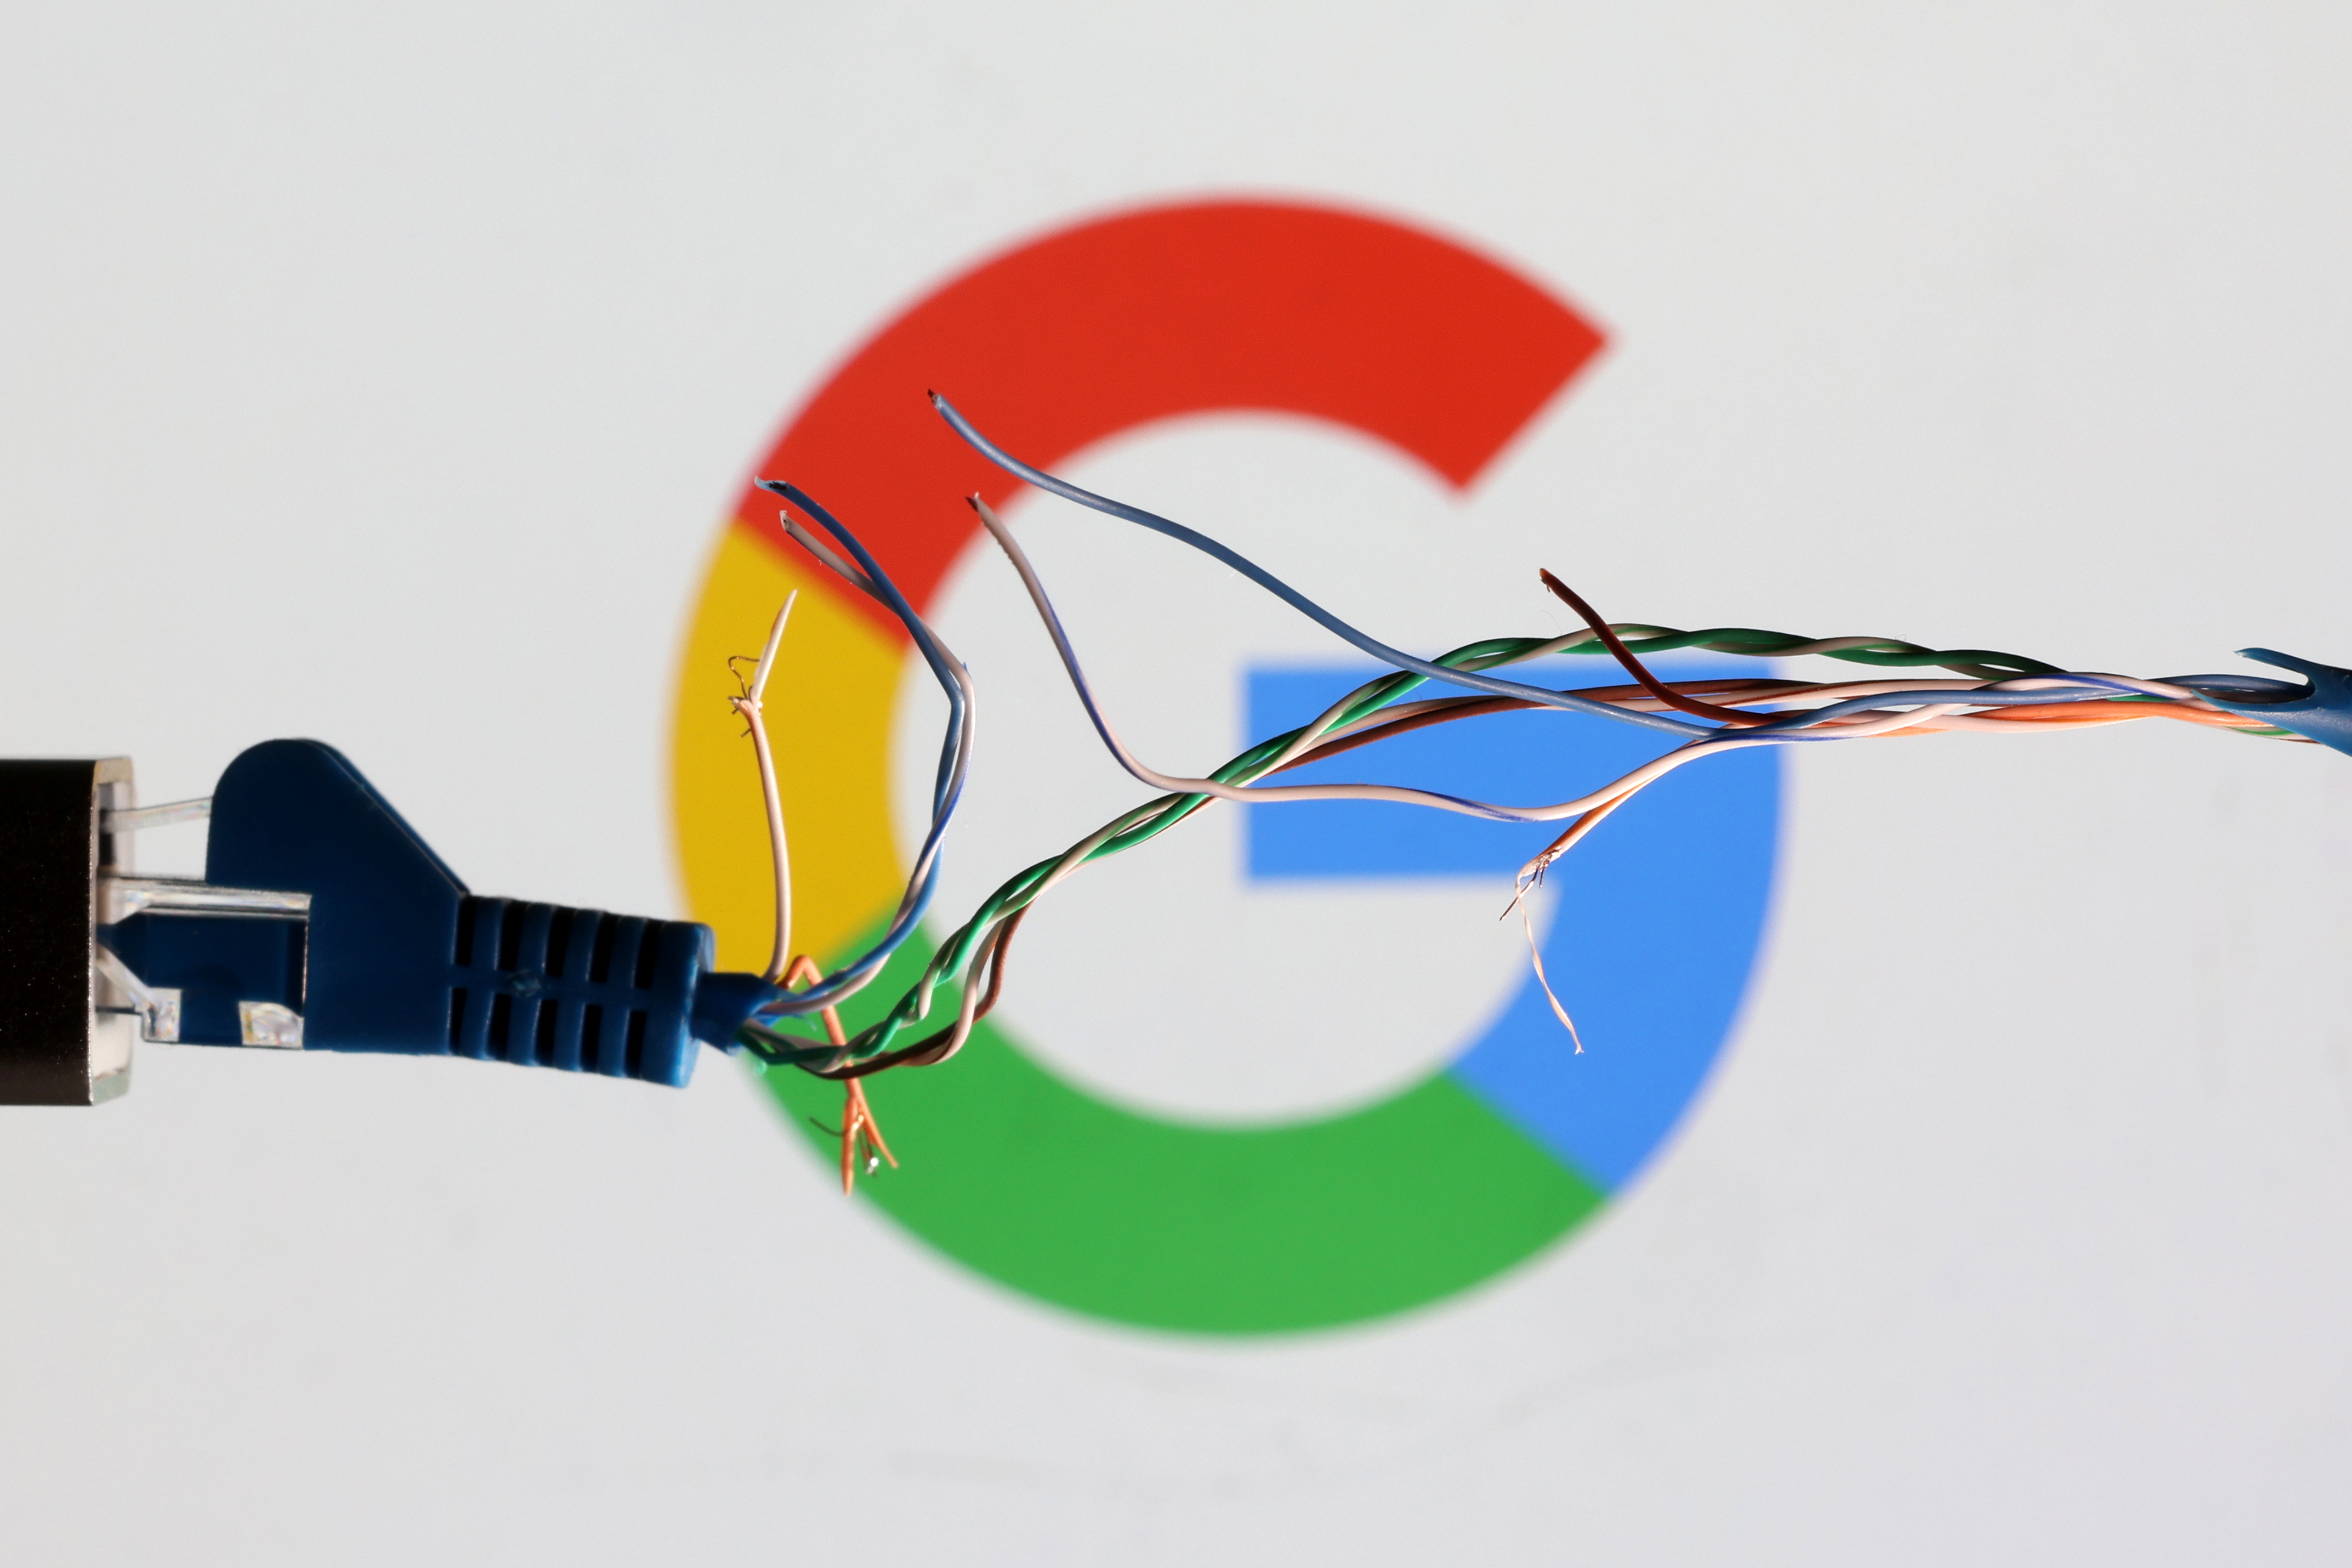 Illustration shows broken Ethernet cable and Google logo